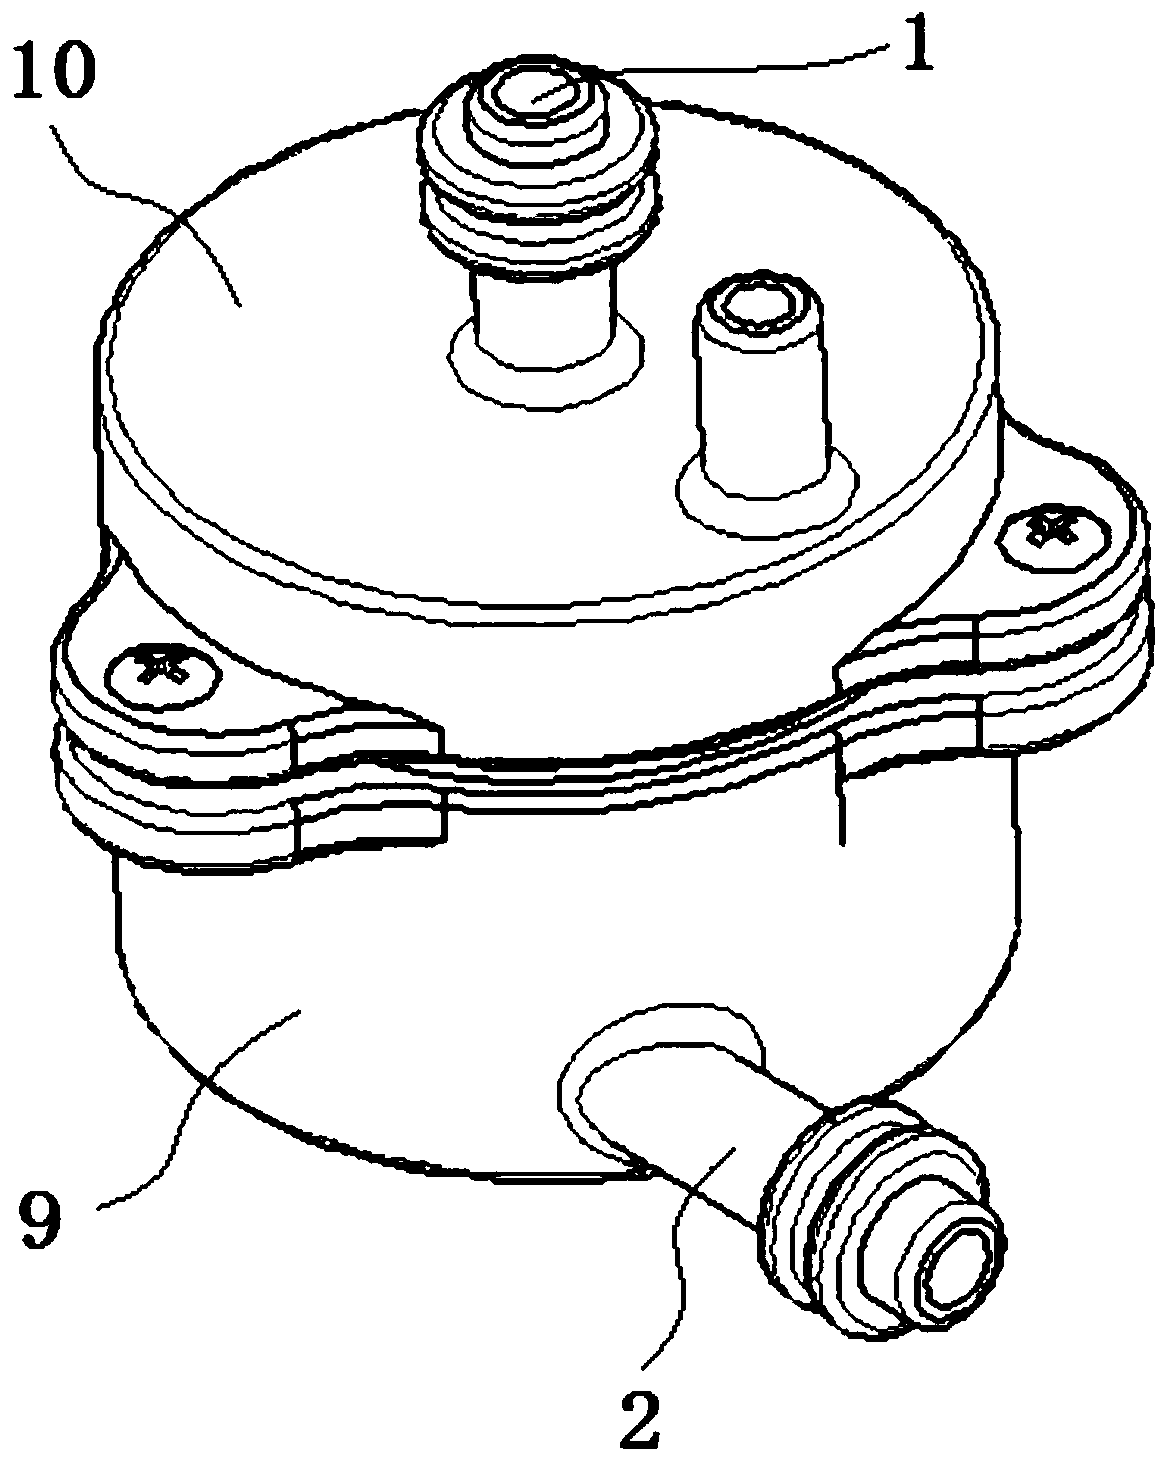 A centrifugal left ventricular assist device